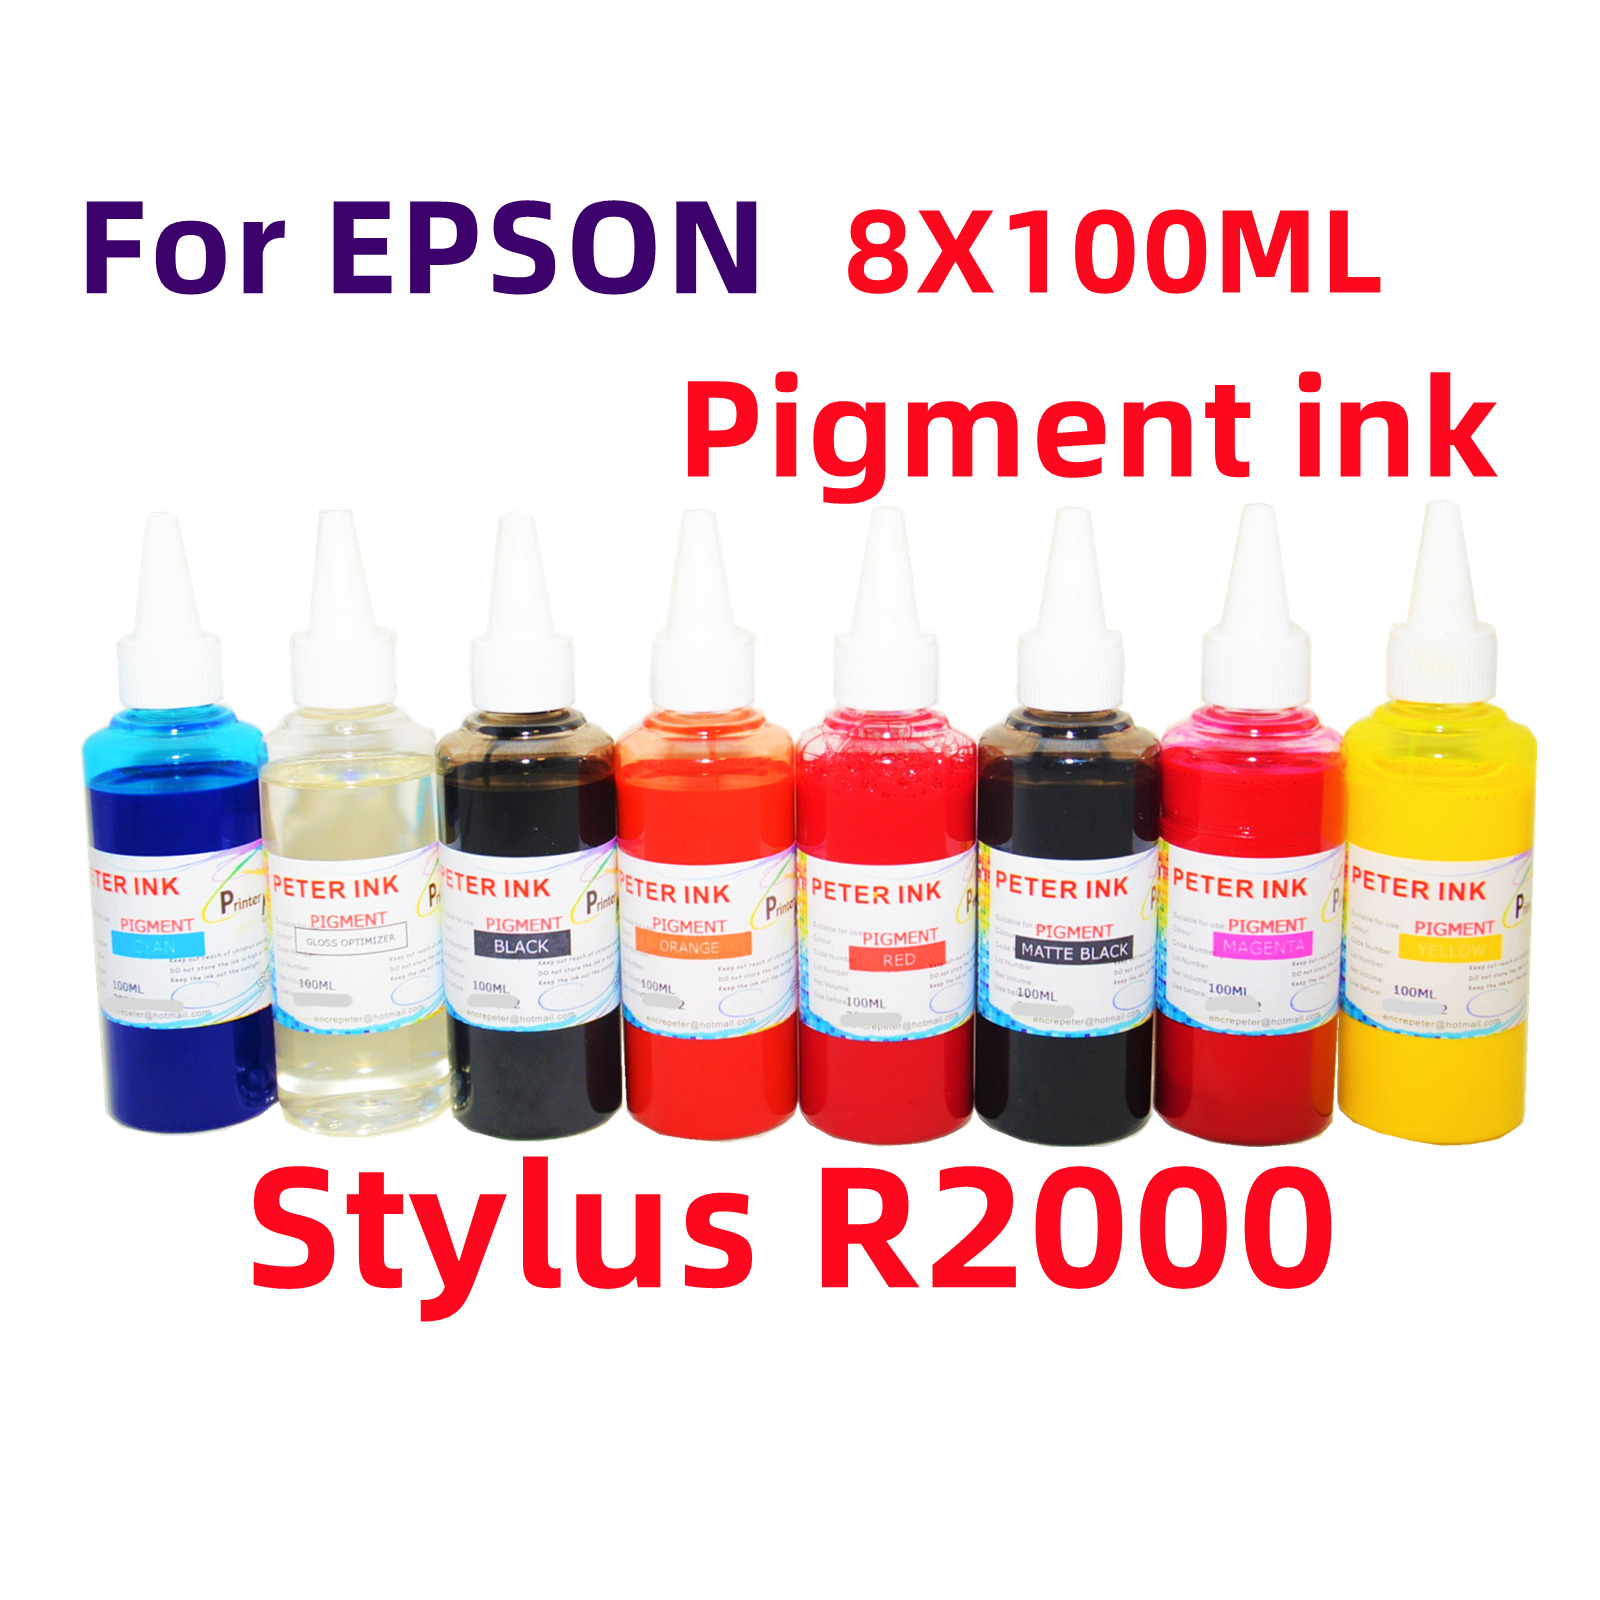 8X100ML Premium Pigment refill ink for R2000 printer CISS CIS T159 159